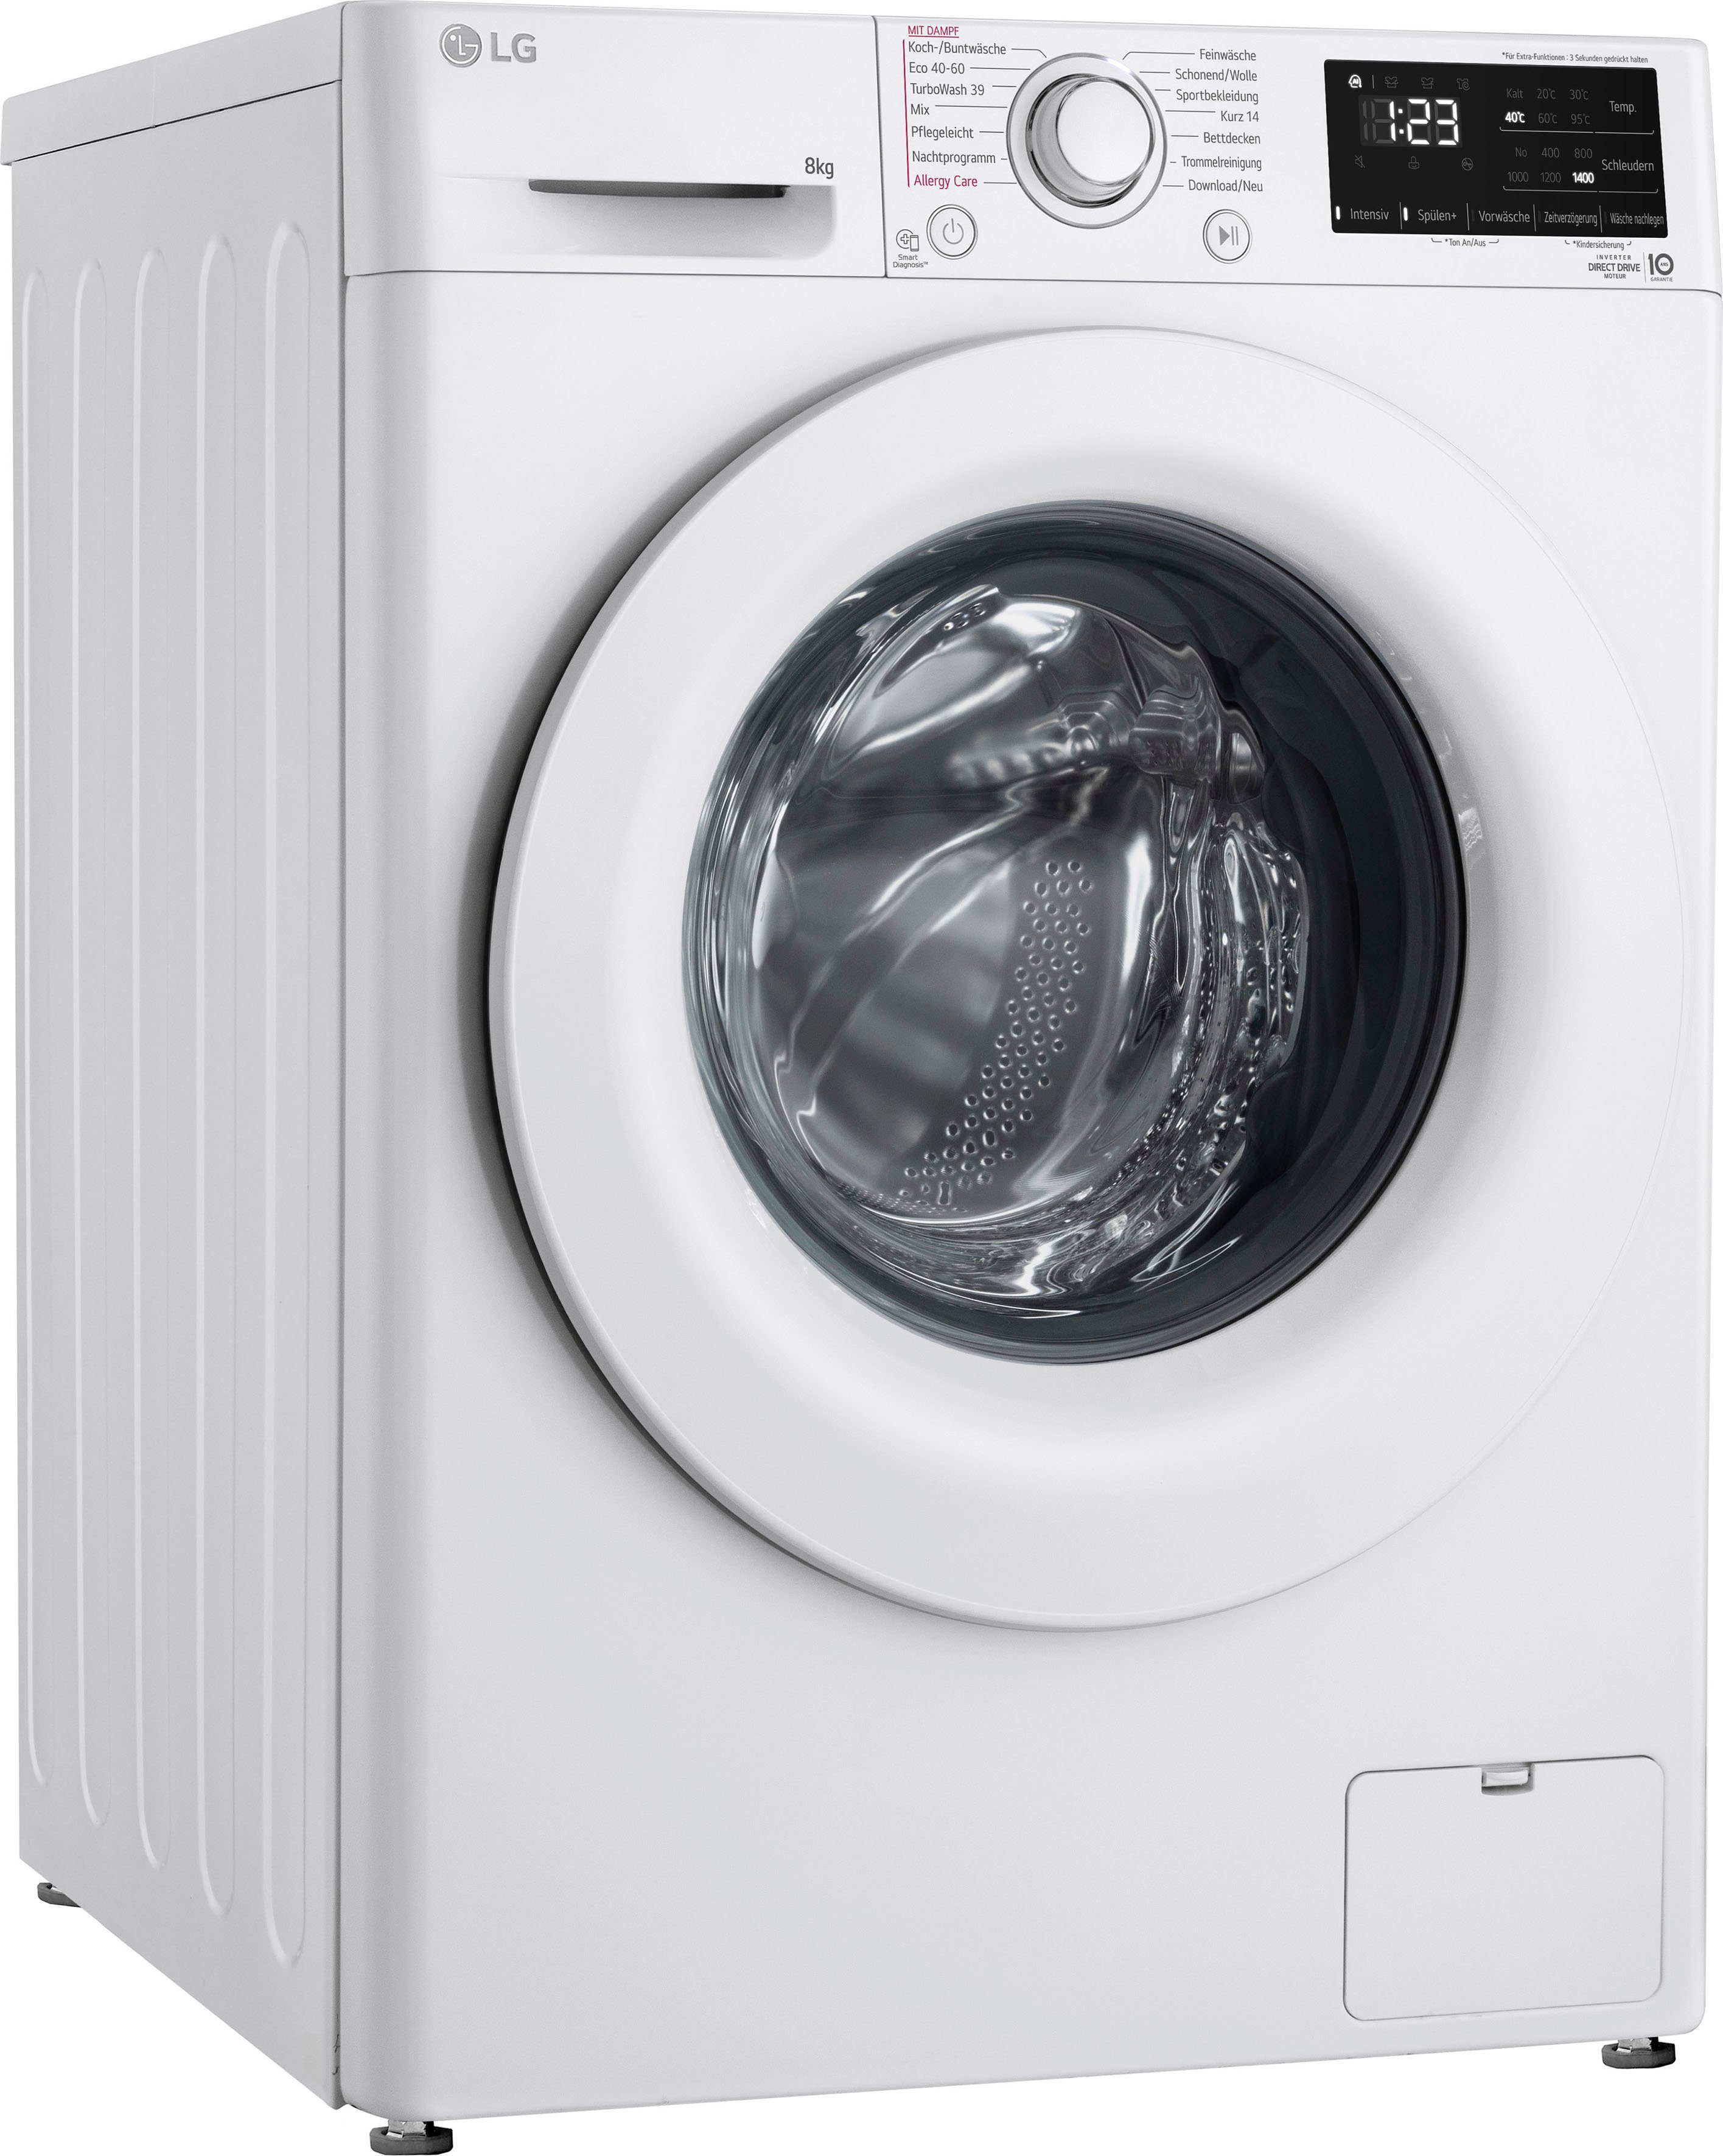 preisverhandlung LG Waschmaschine 3 F4WV3183, 8 U/min 1400 kg